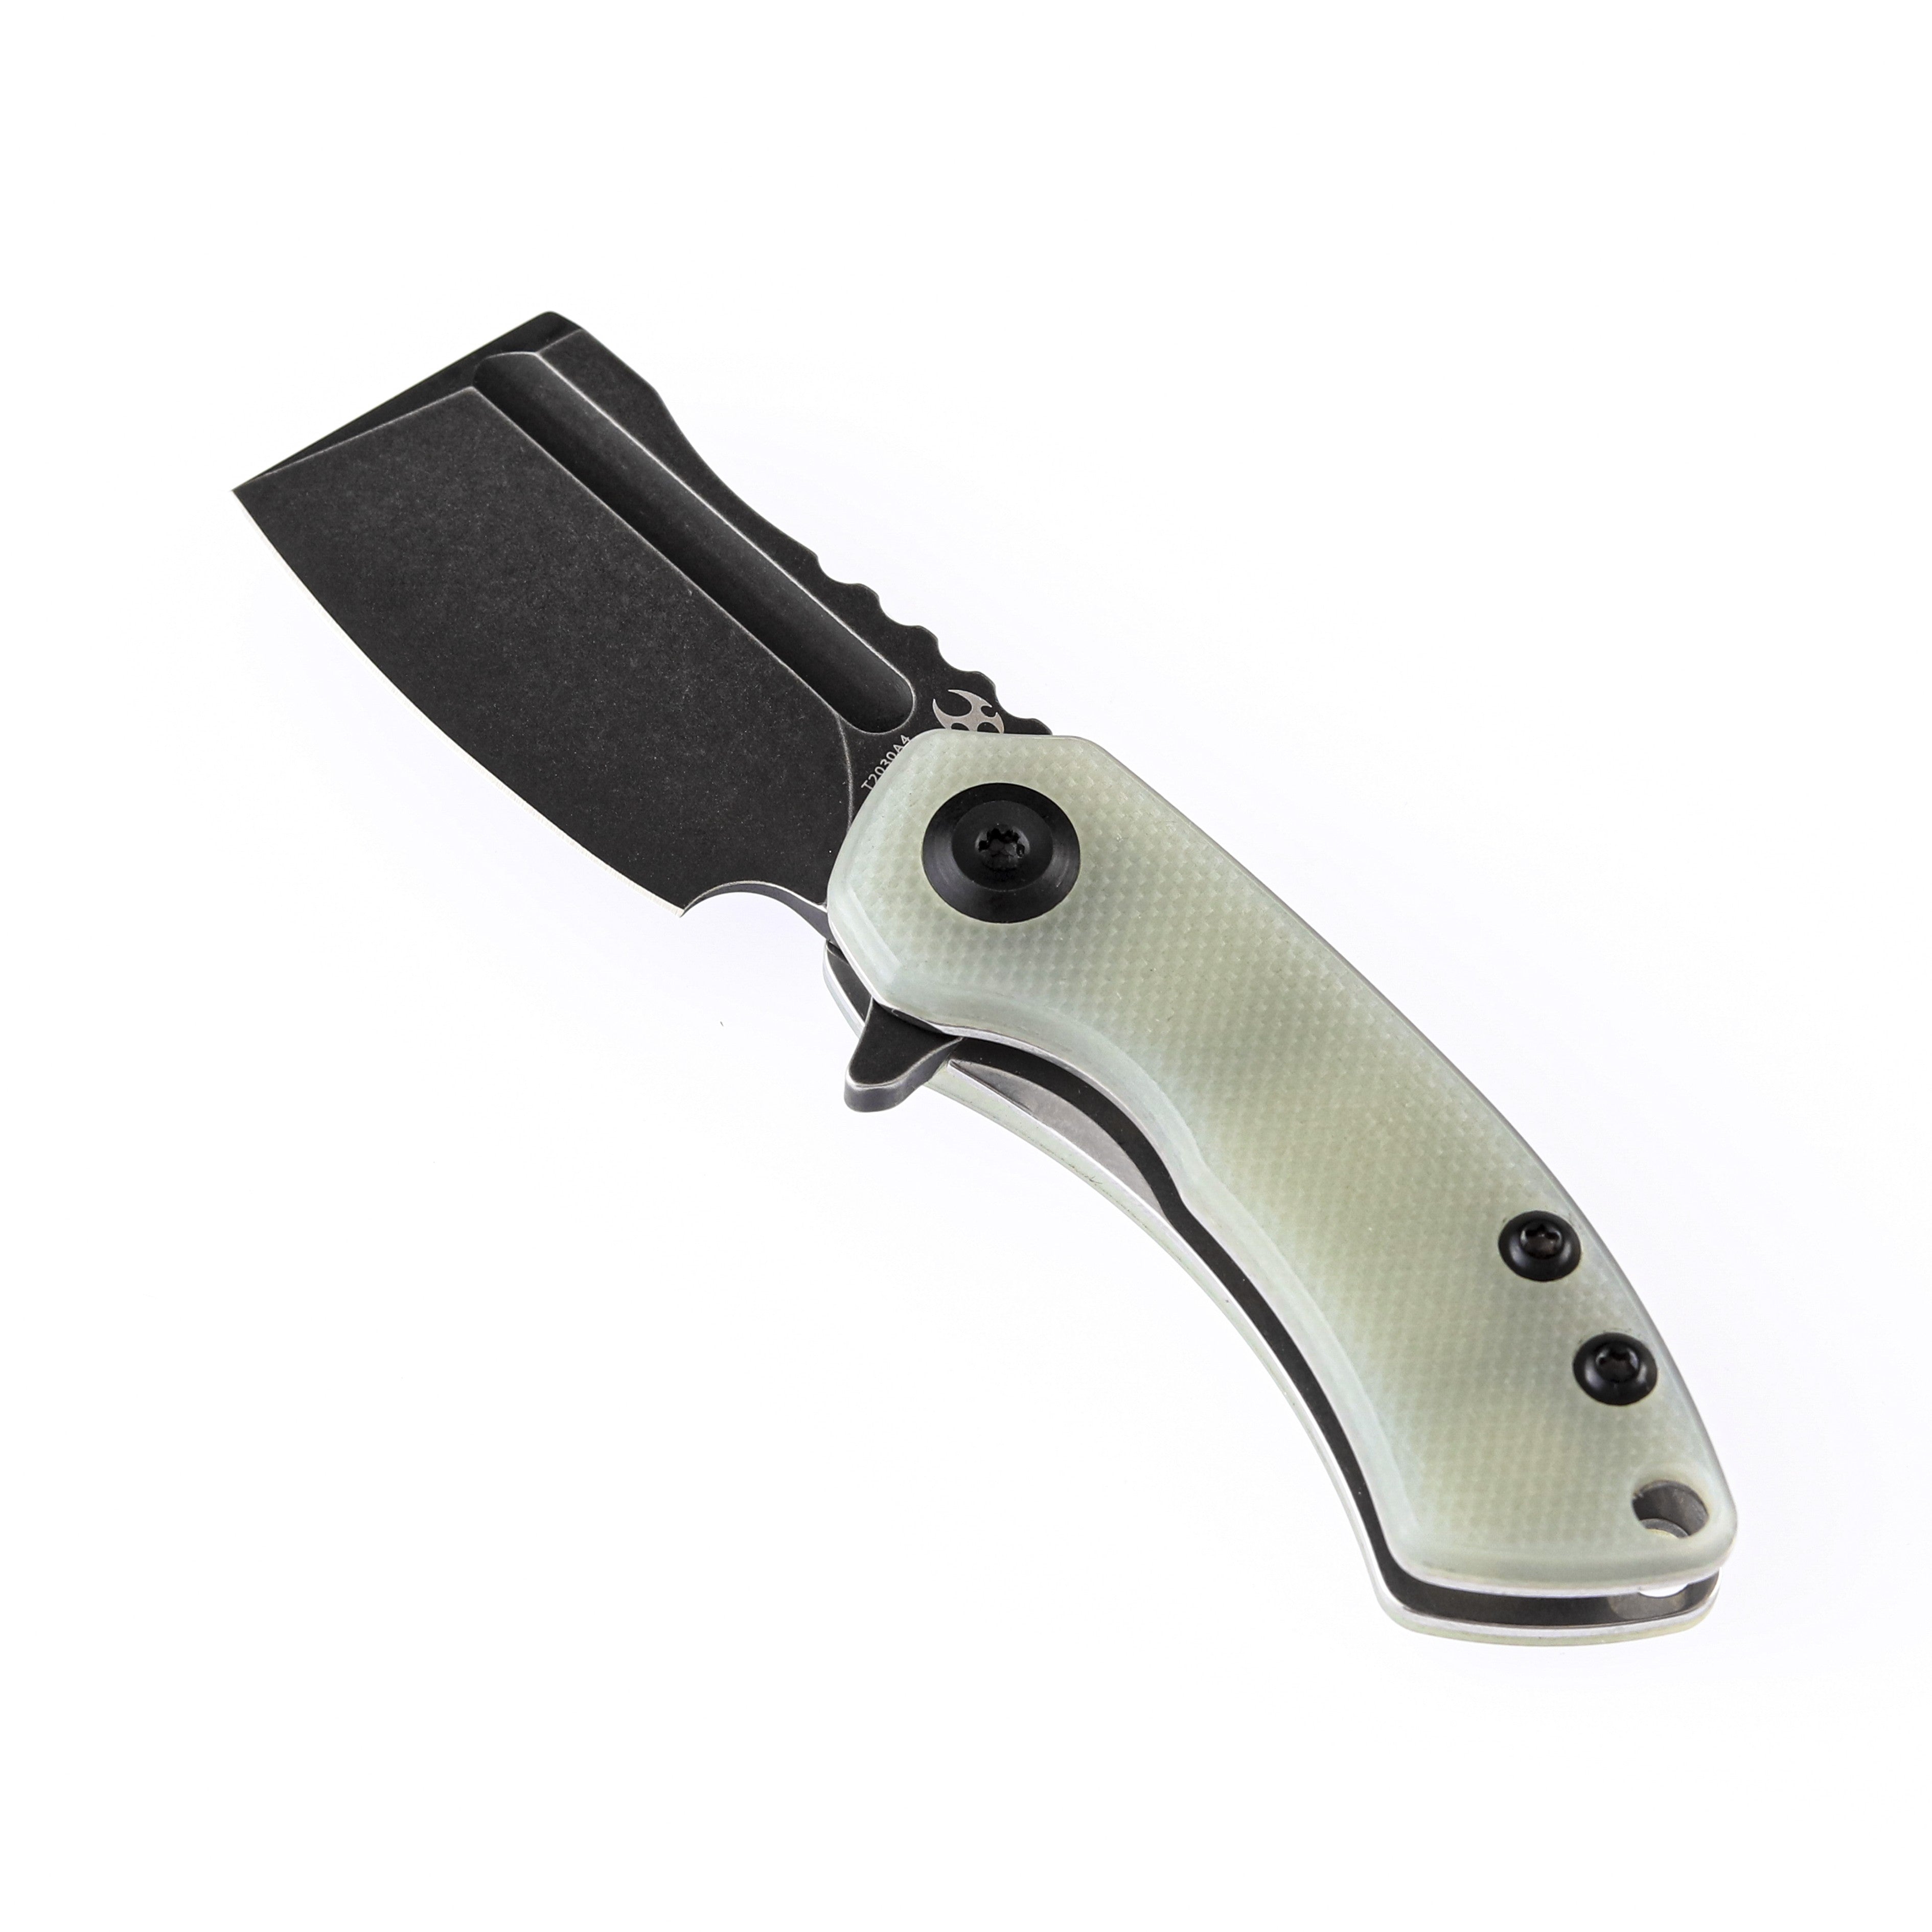 Kansept Knives T3030A4 Mini Korvid 154CM Blade Jade G10 Handle Liner Lock Edc Knives